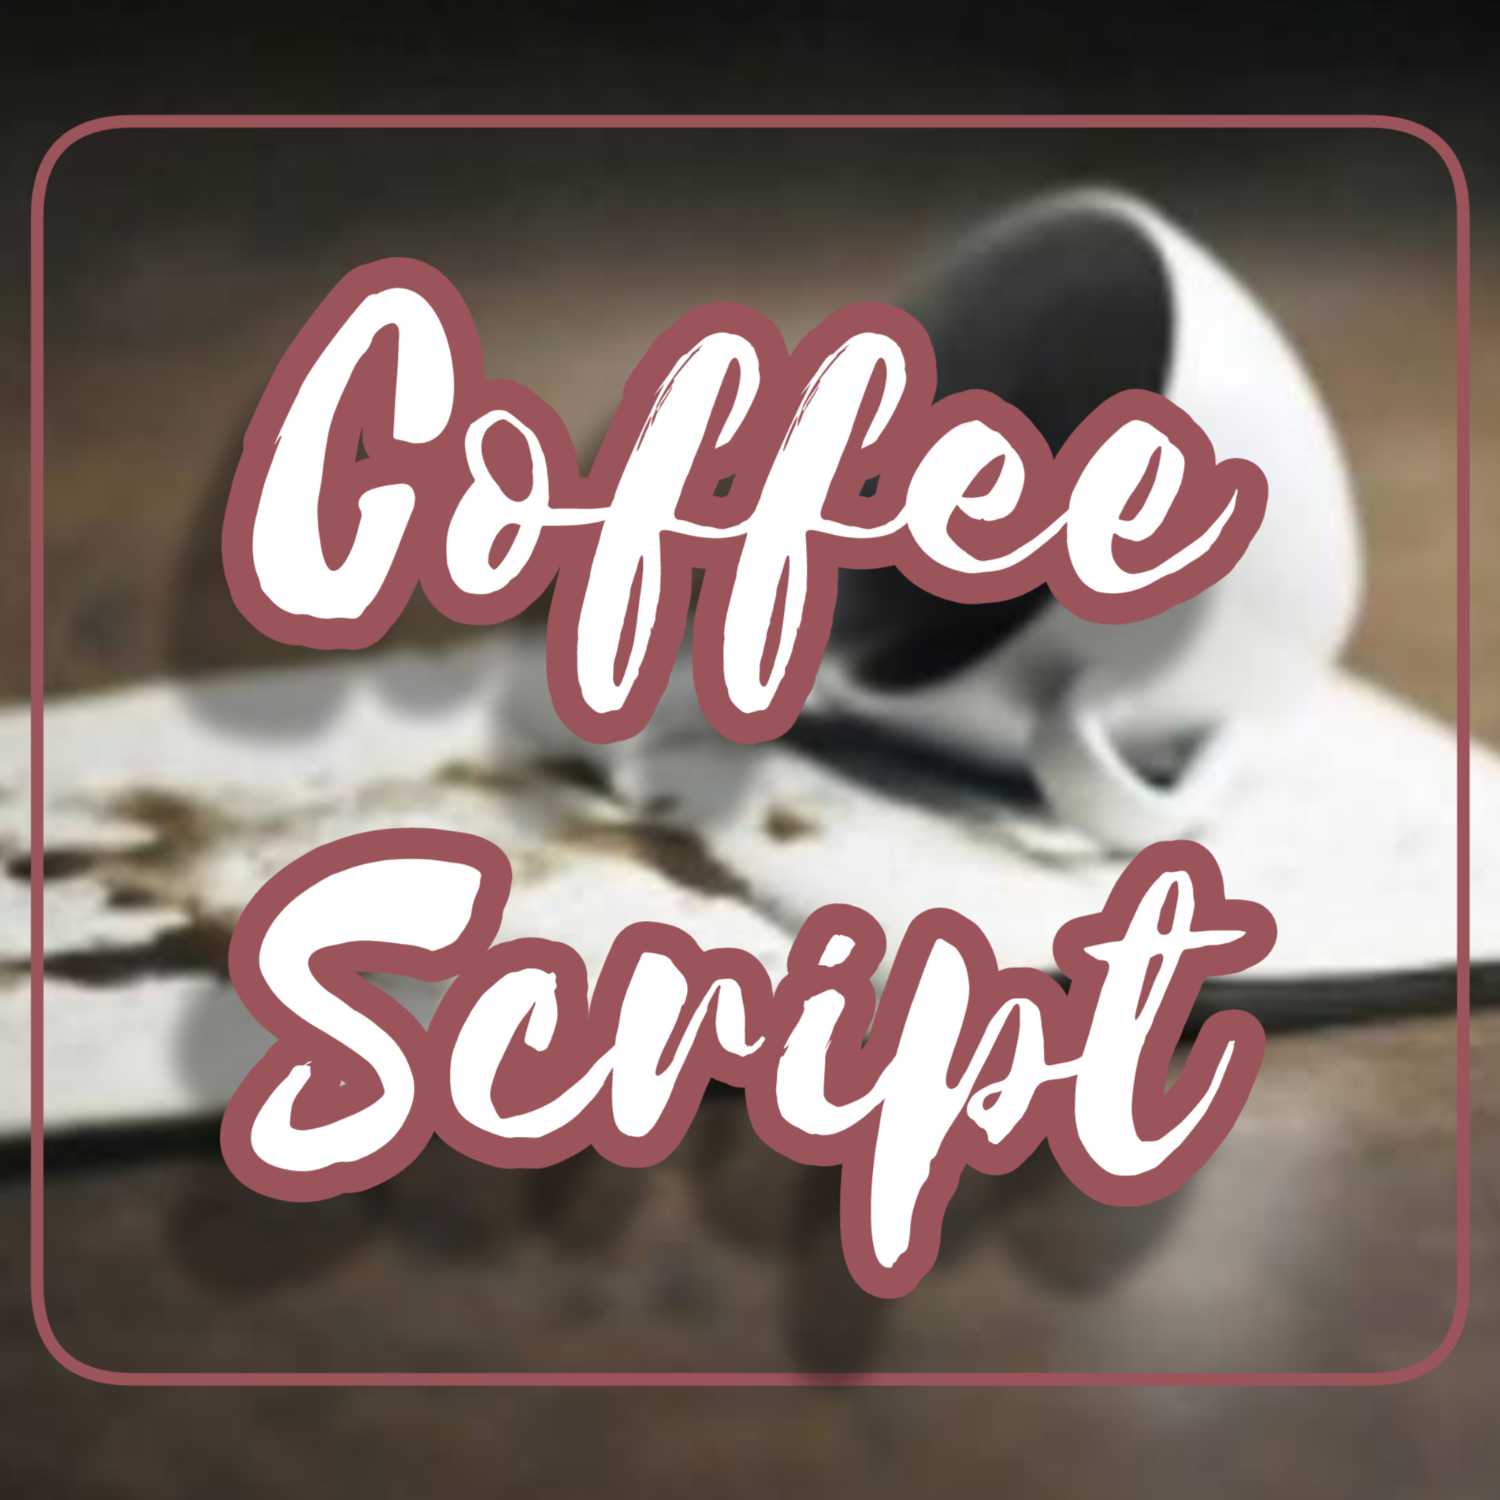 Coffee Script